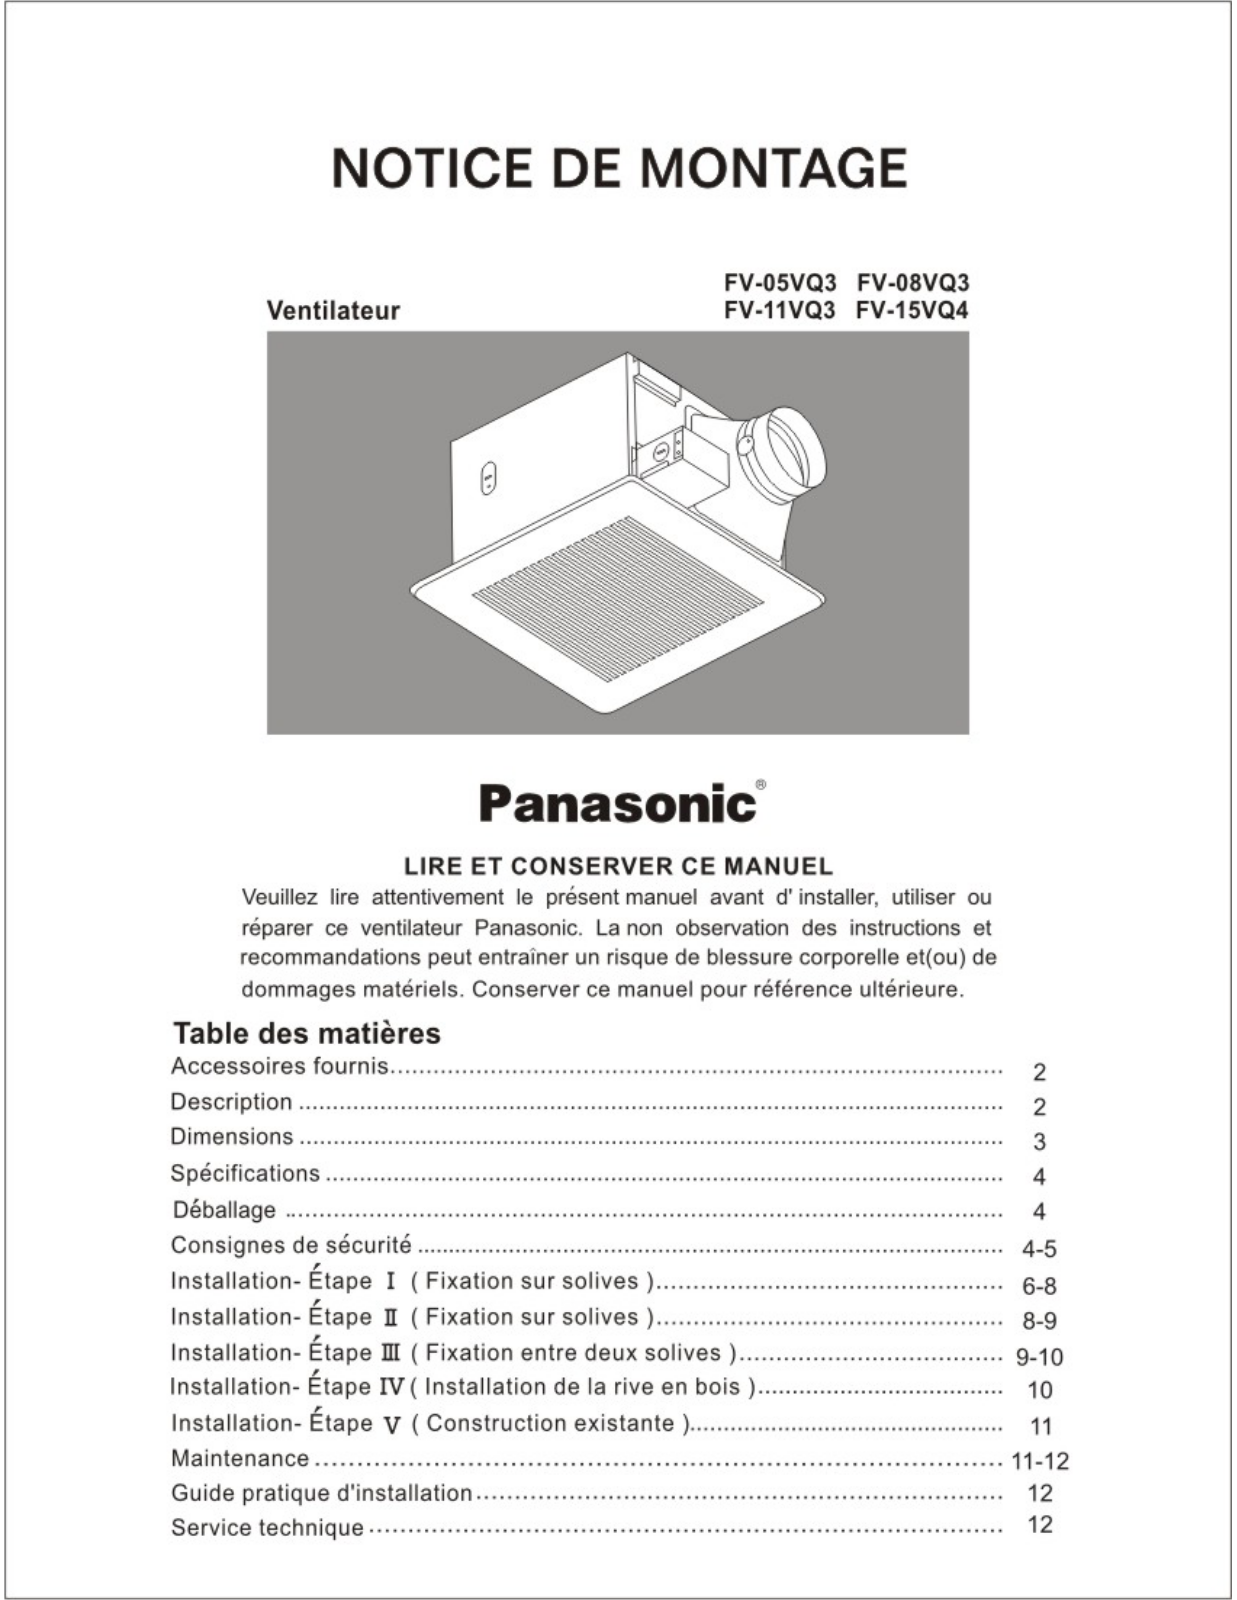 Panasonic fv-1xvq4, fv-0xvq3 Operation Manual